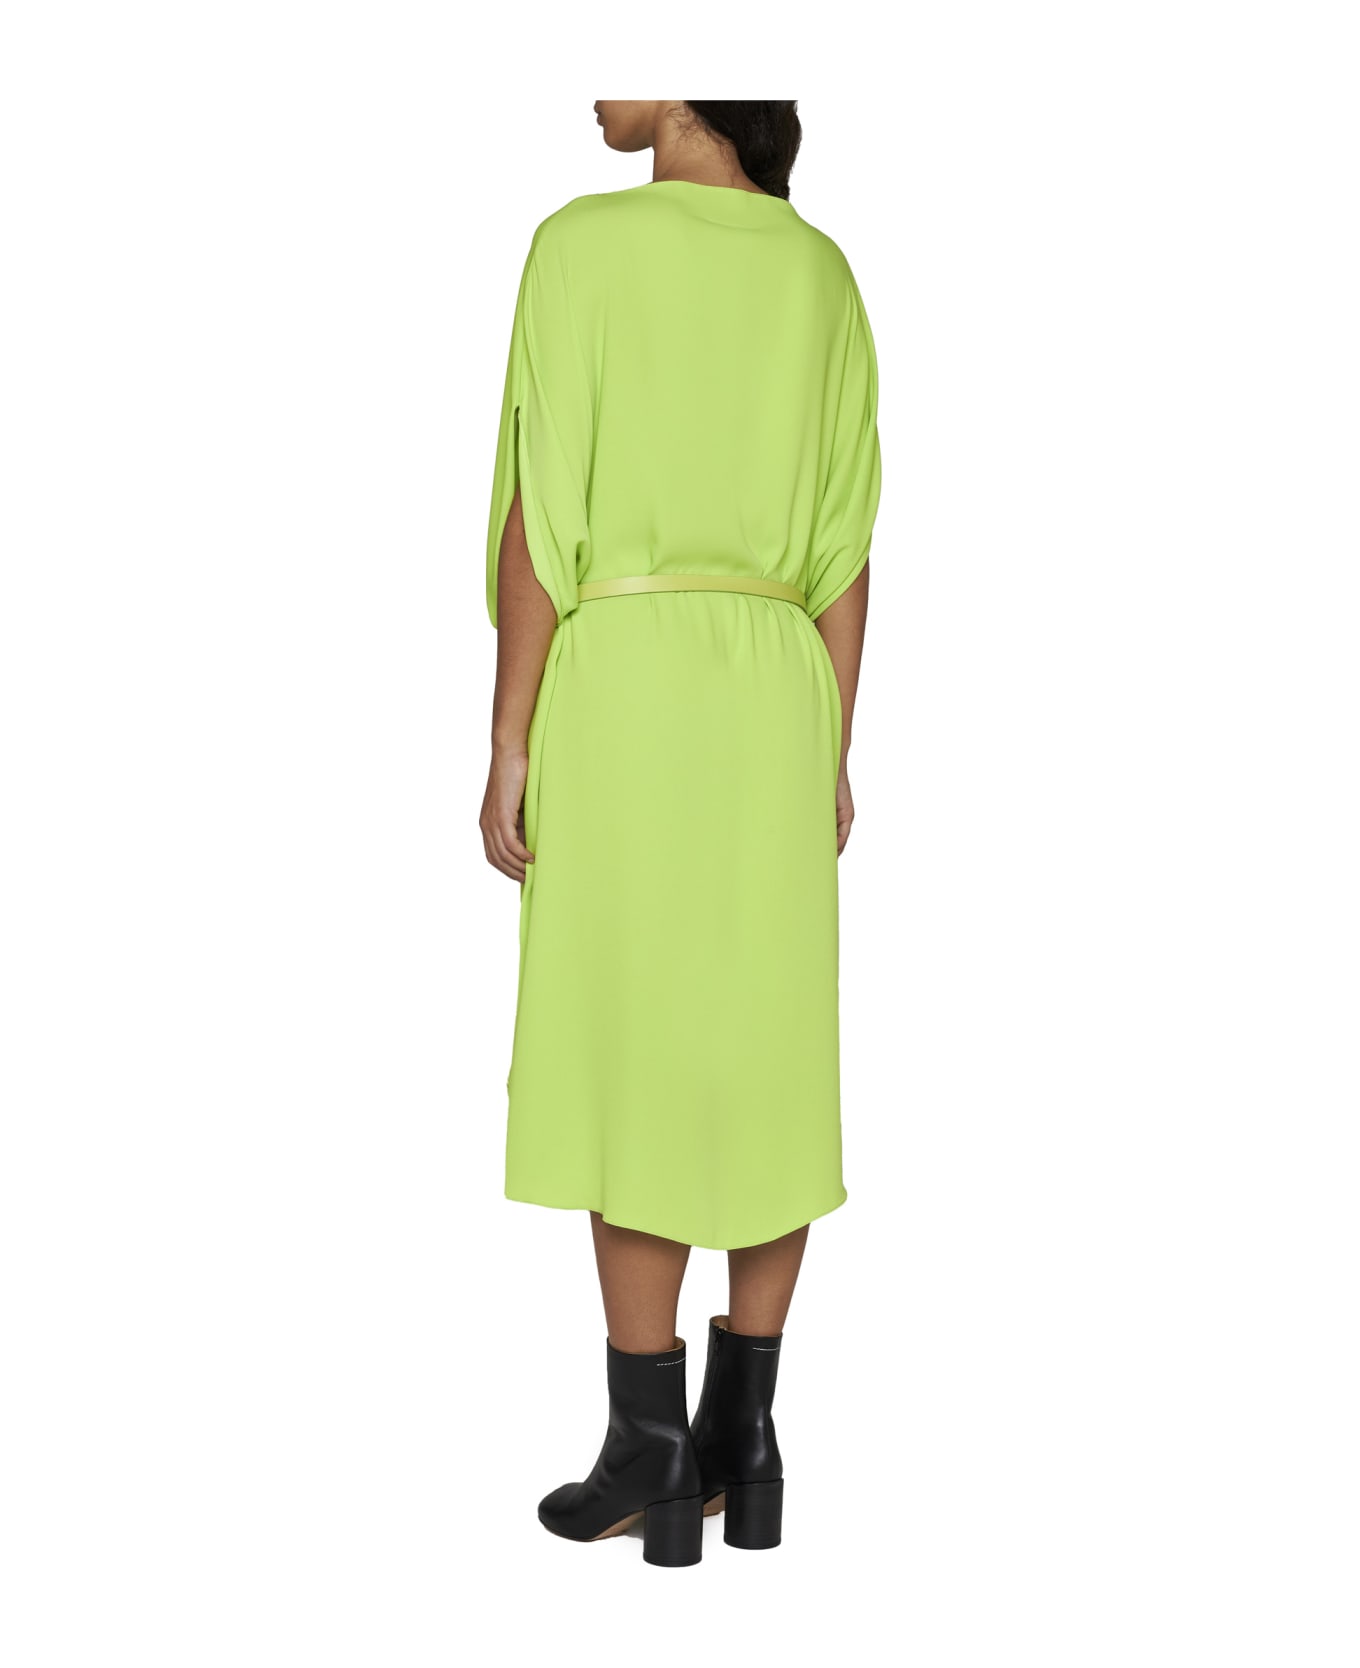 MM6 Maison Margiela Dress - Neon green